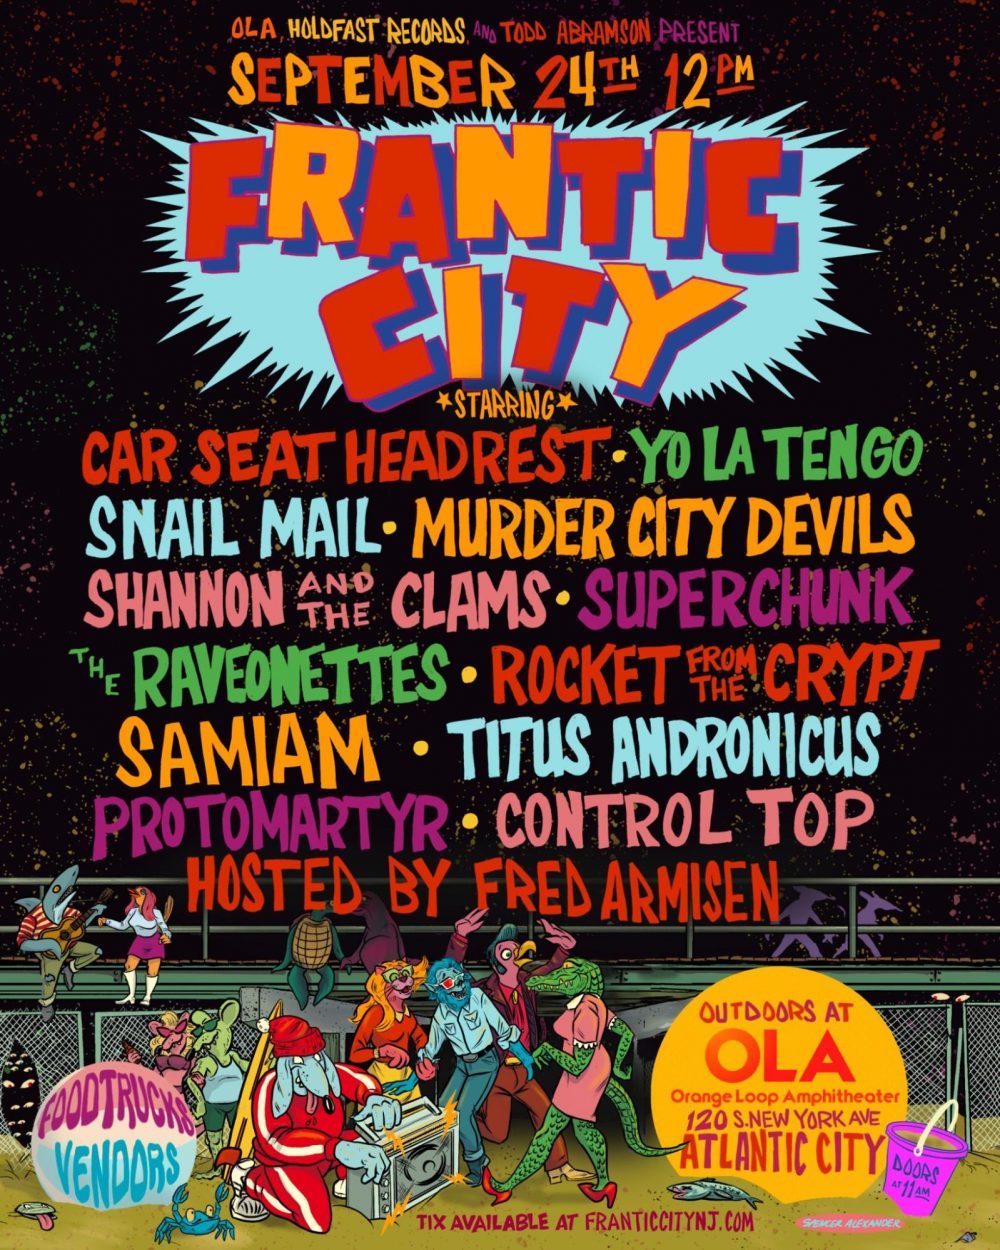 Car Seat Headrest, Yo La Tengo, Snail Mail to Headline First-Ever Frantic City Festival